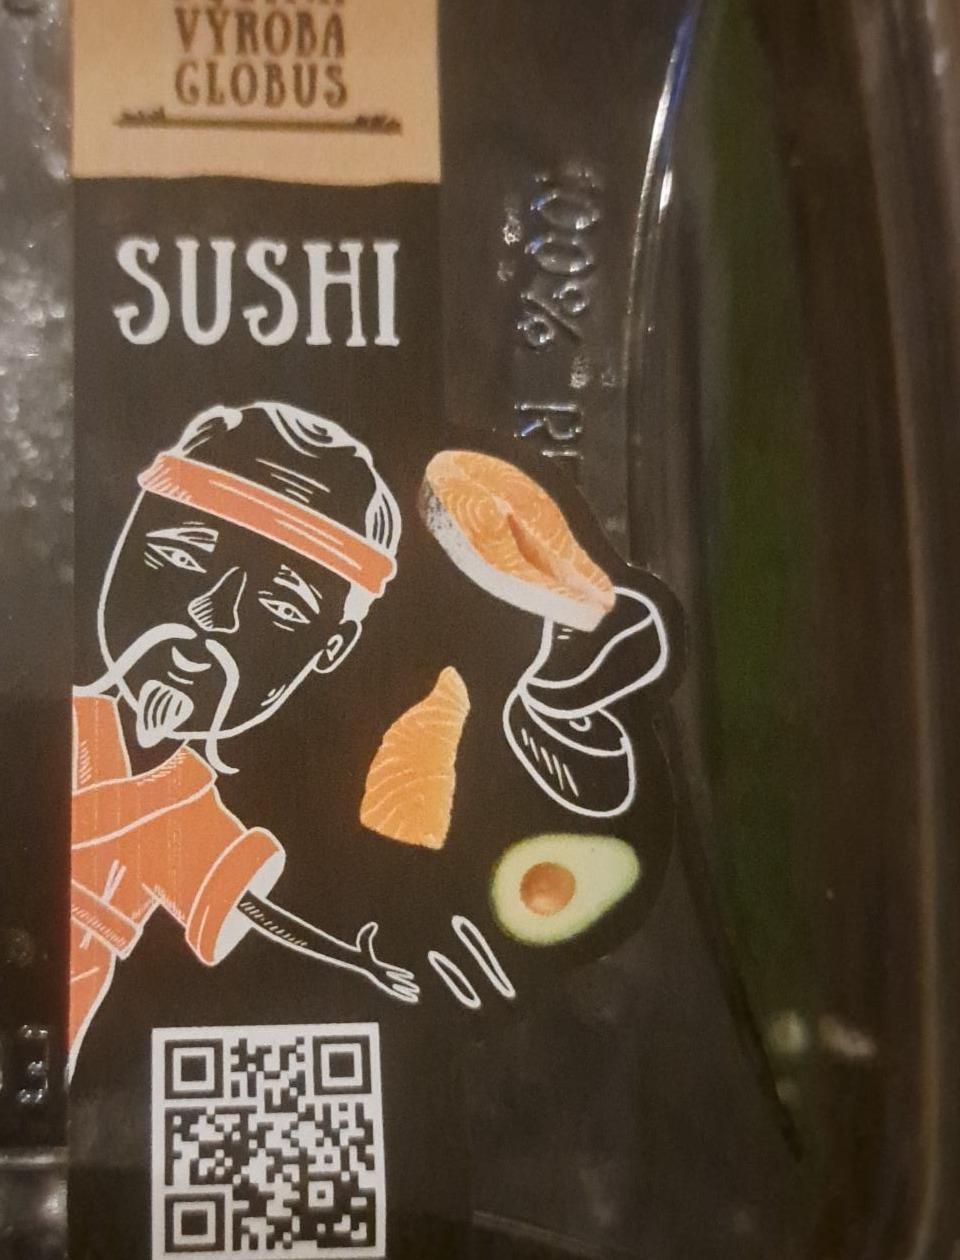 Fotografie - sushi Poctivá výroba Globus